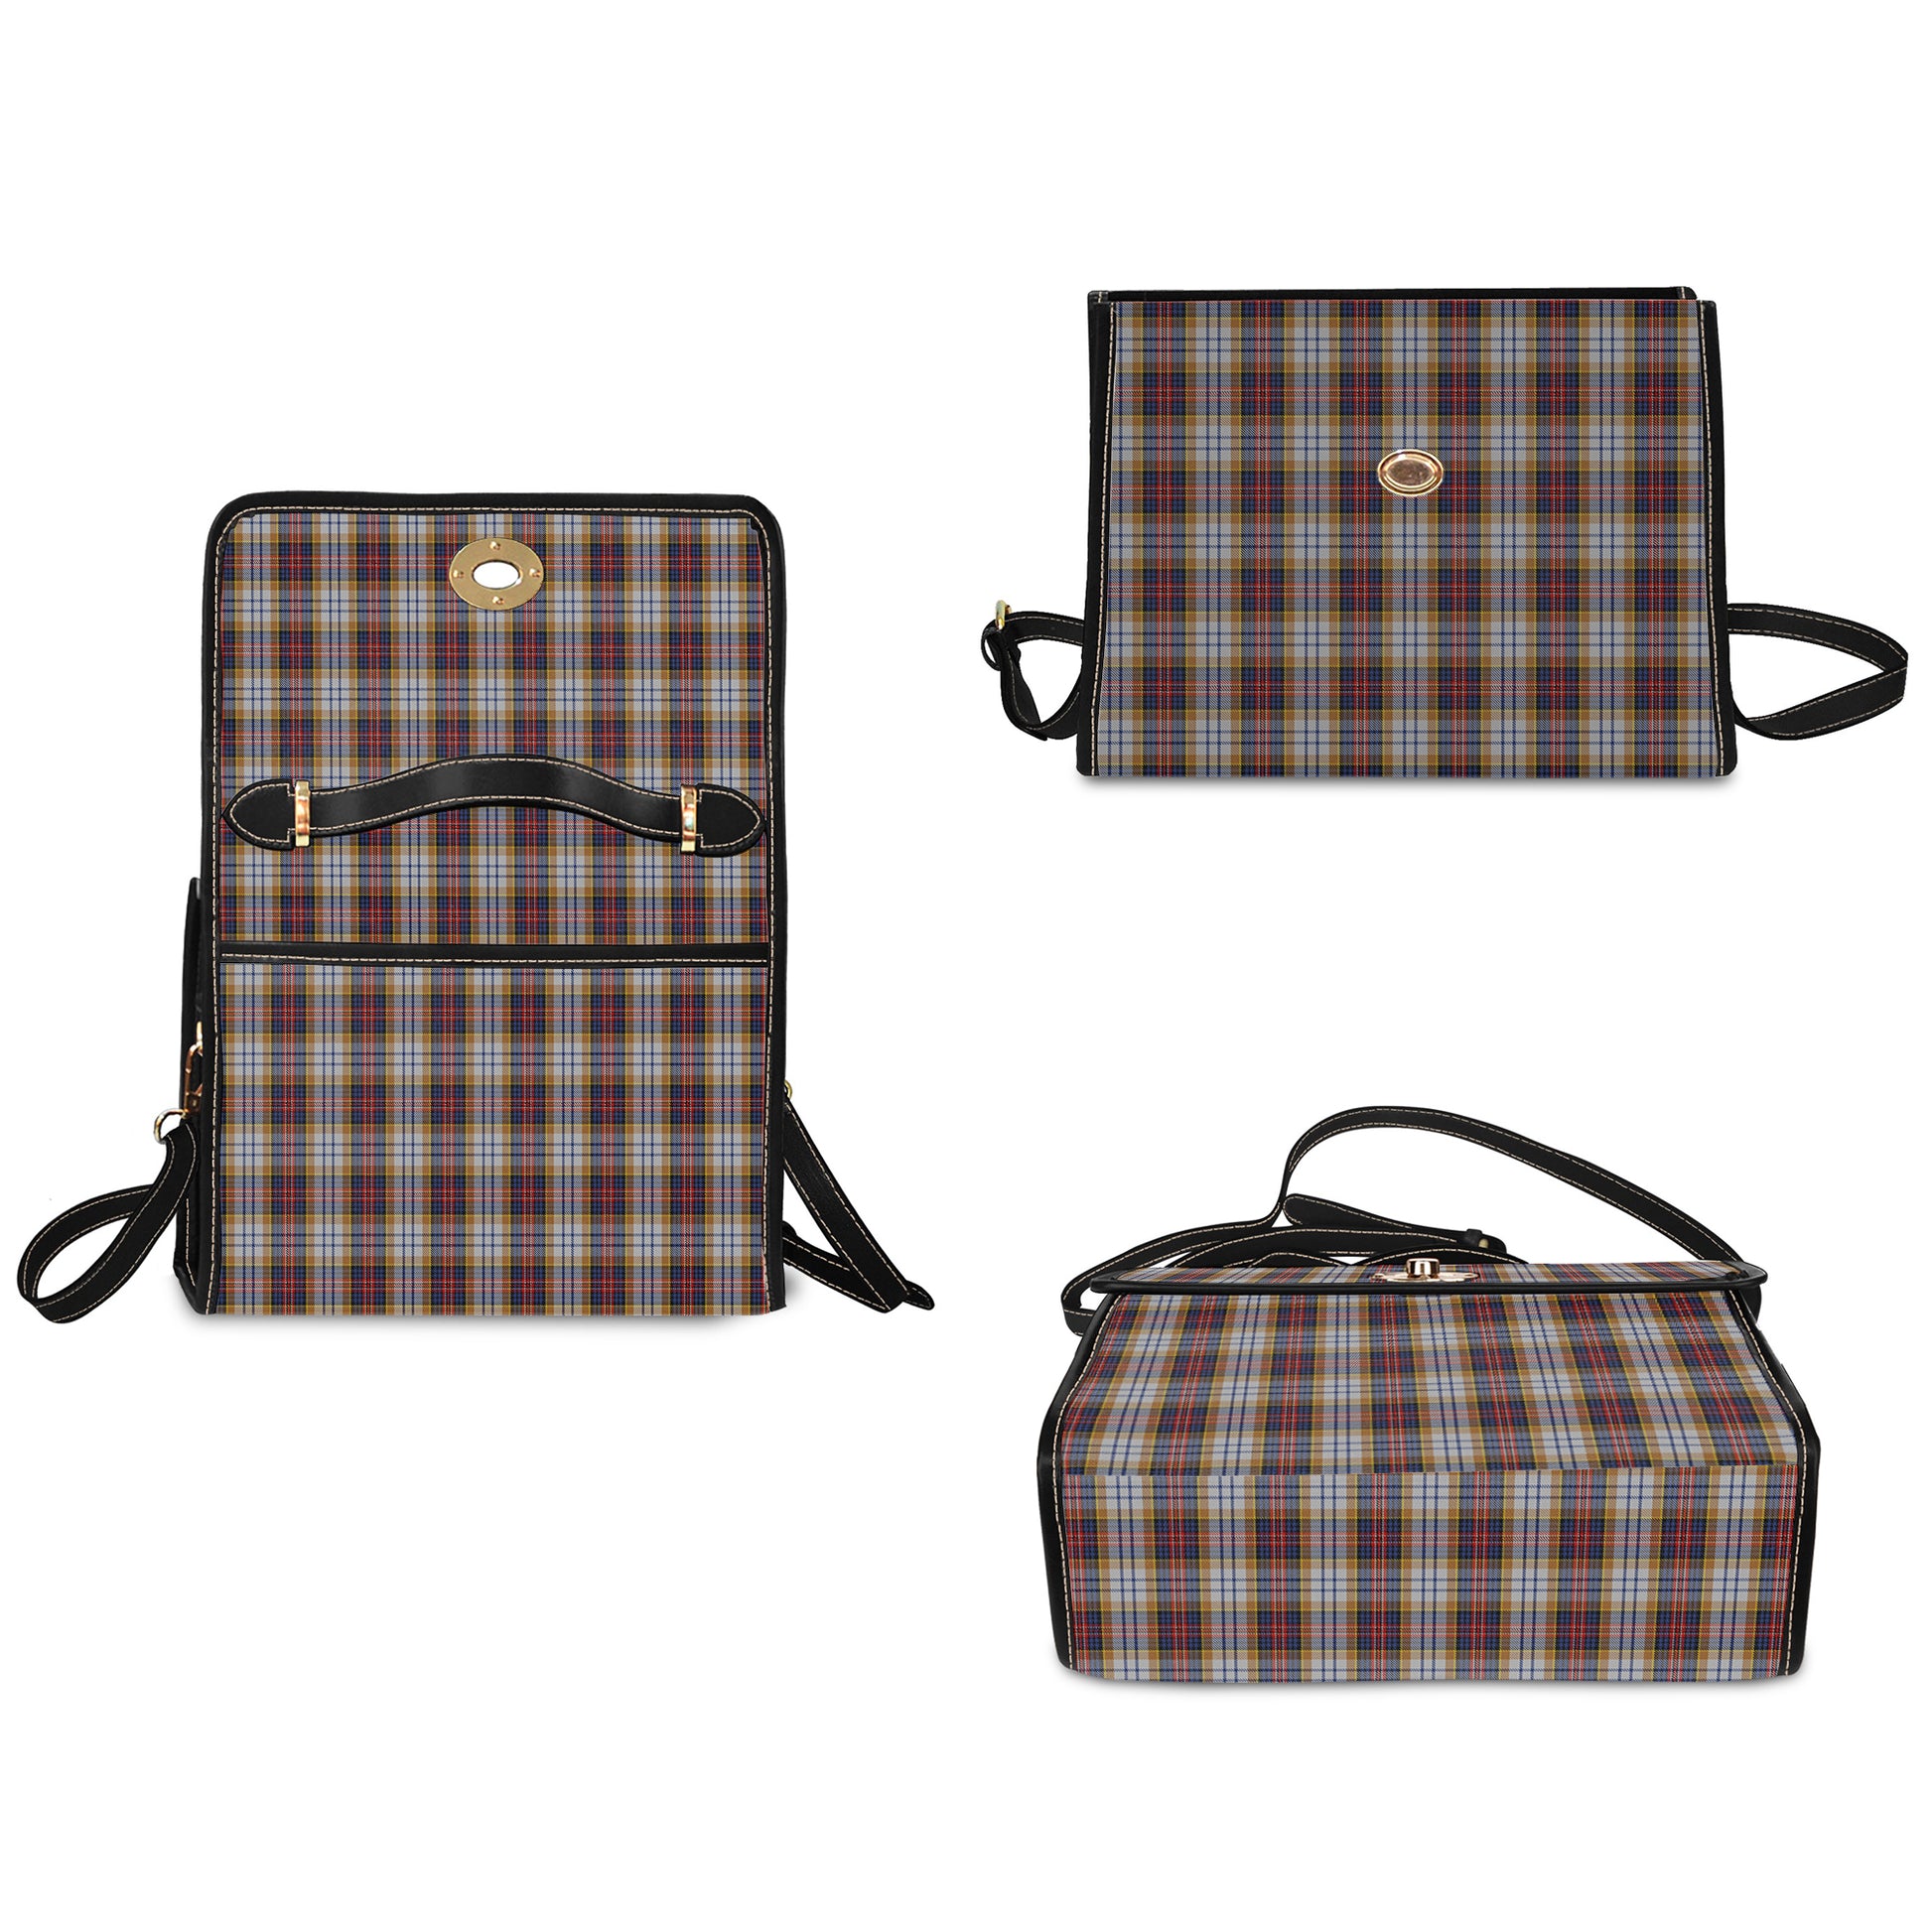 macinnes-ancient-hunting-tartan-leather-strap-waterproof-canvas-bag